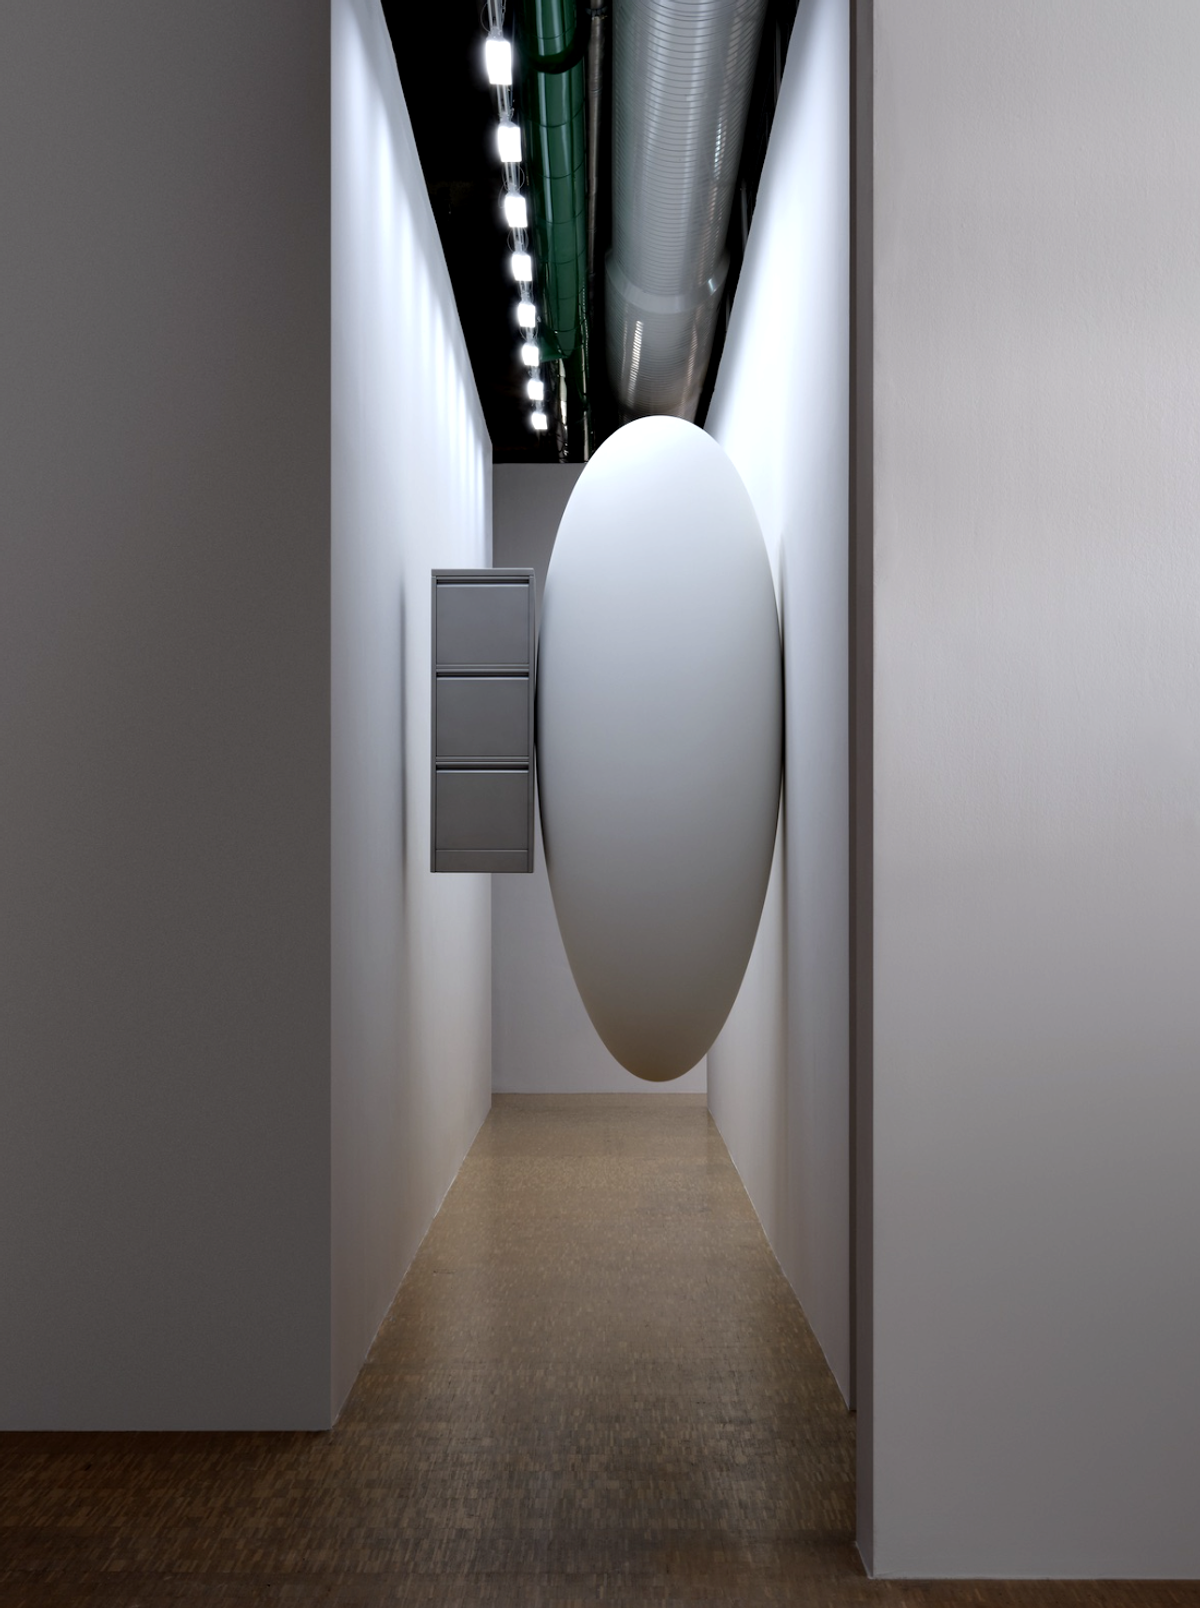 Installation view of Tarik Kiswanson's The Wait (2023), Centre Pompidou, Paris

Courtesy of the artist and Carlier Gebauer, Berlin/Madrid, ©Centre Pompidou; Photo: Bertrand Prévost